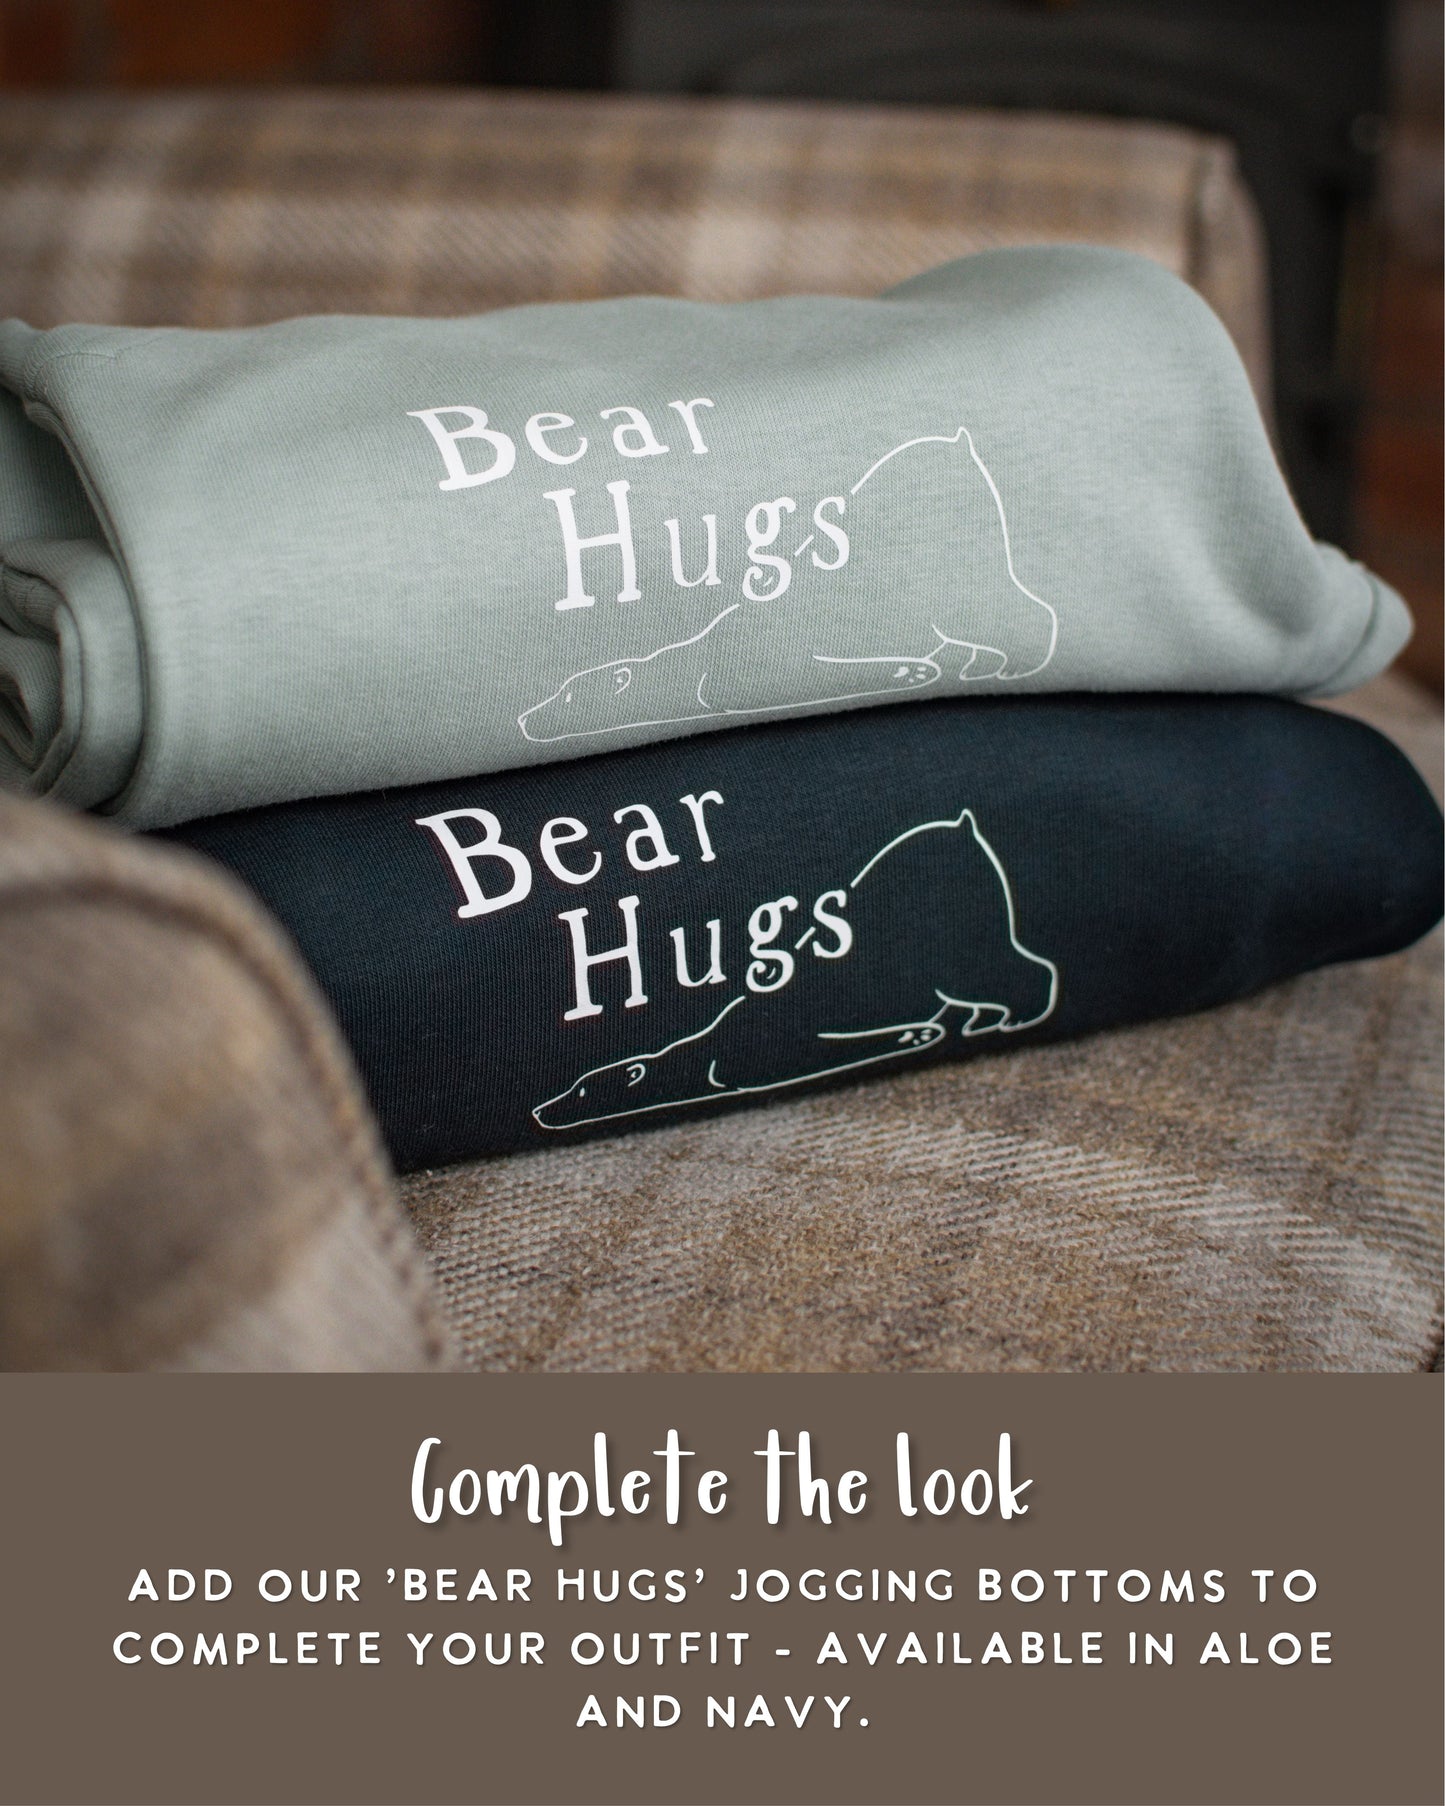 Bear Hugs - Recycled Gilet